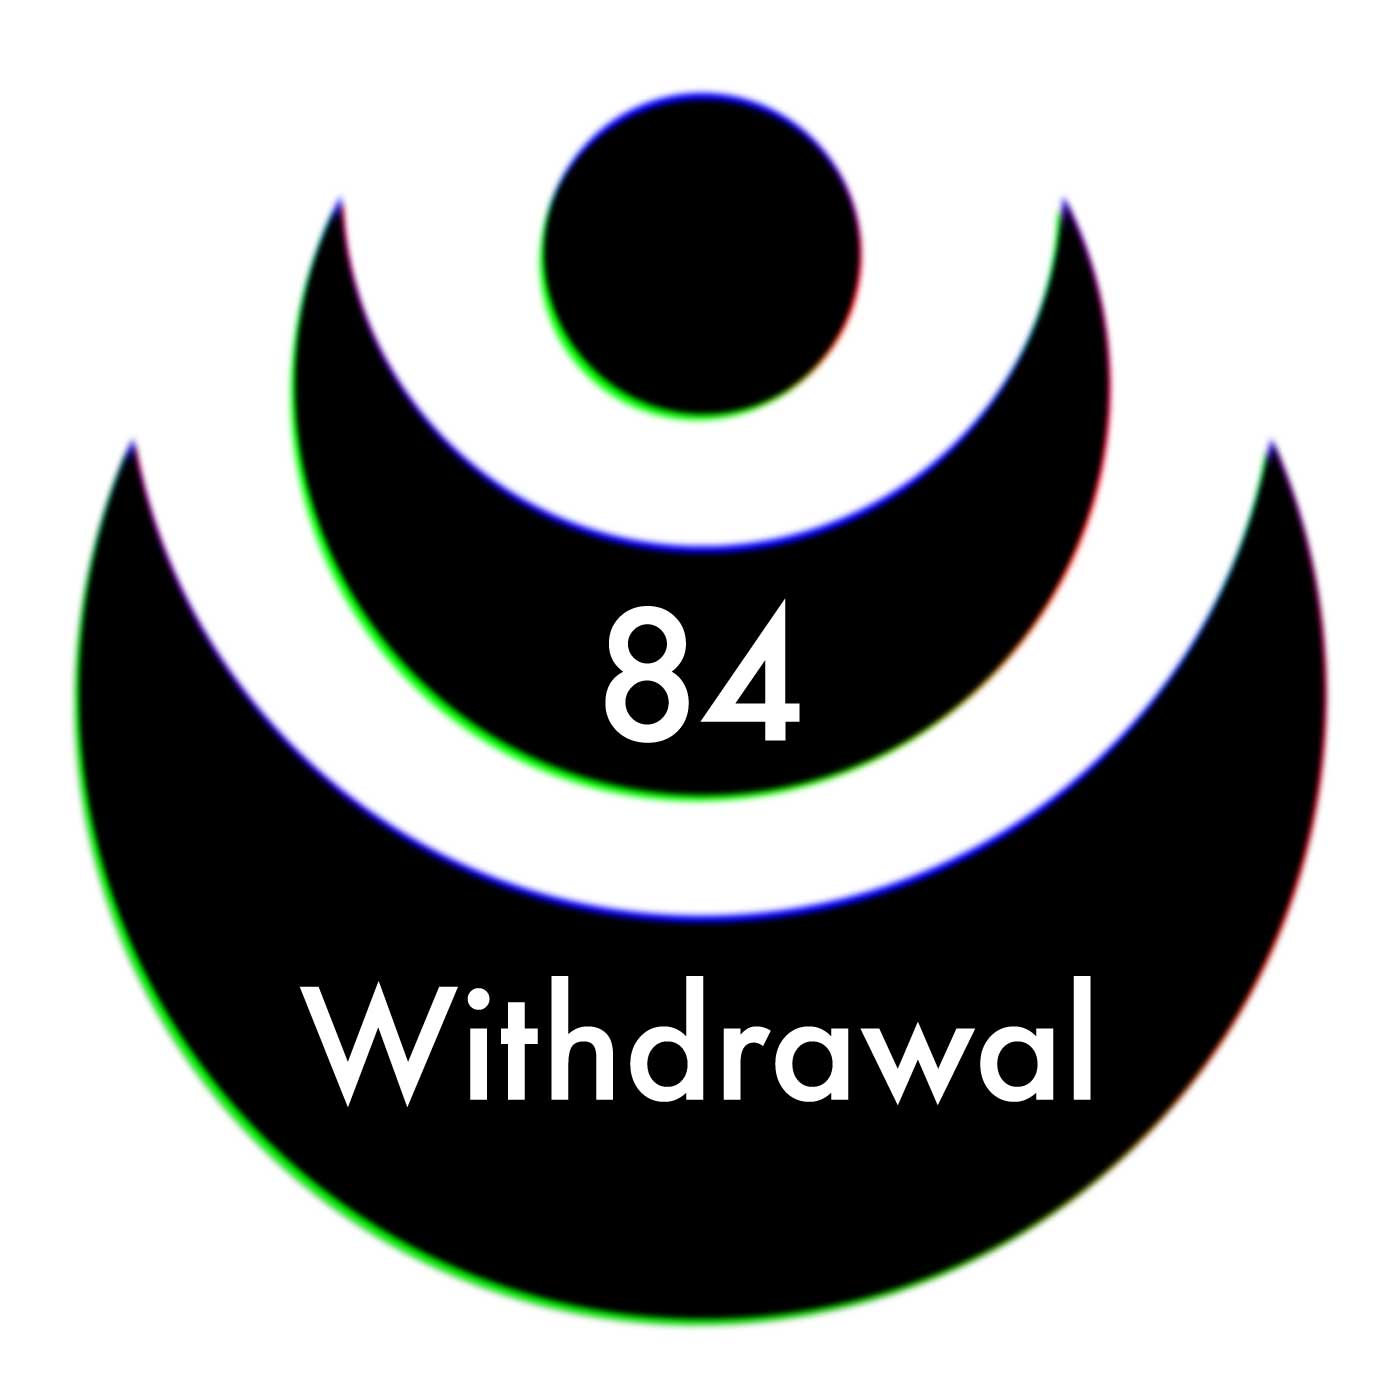 84 – Withdrawal